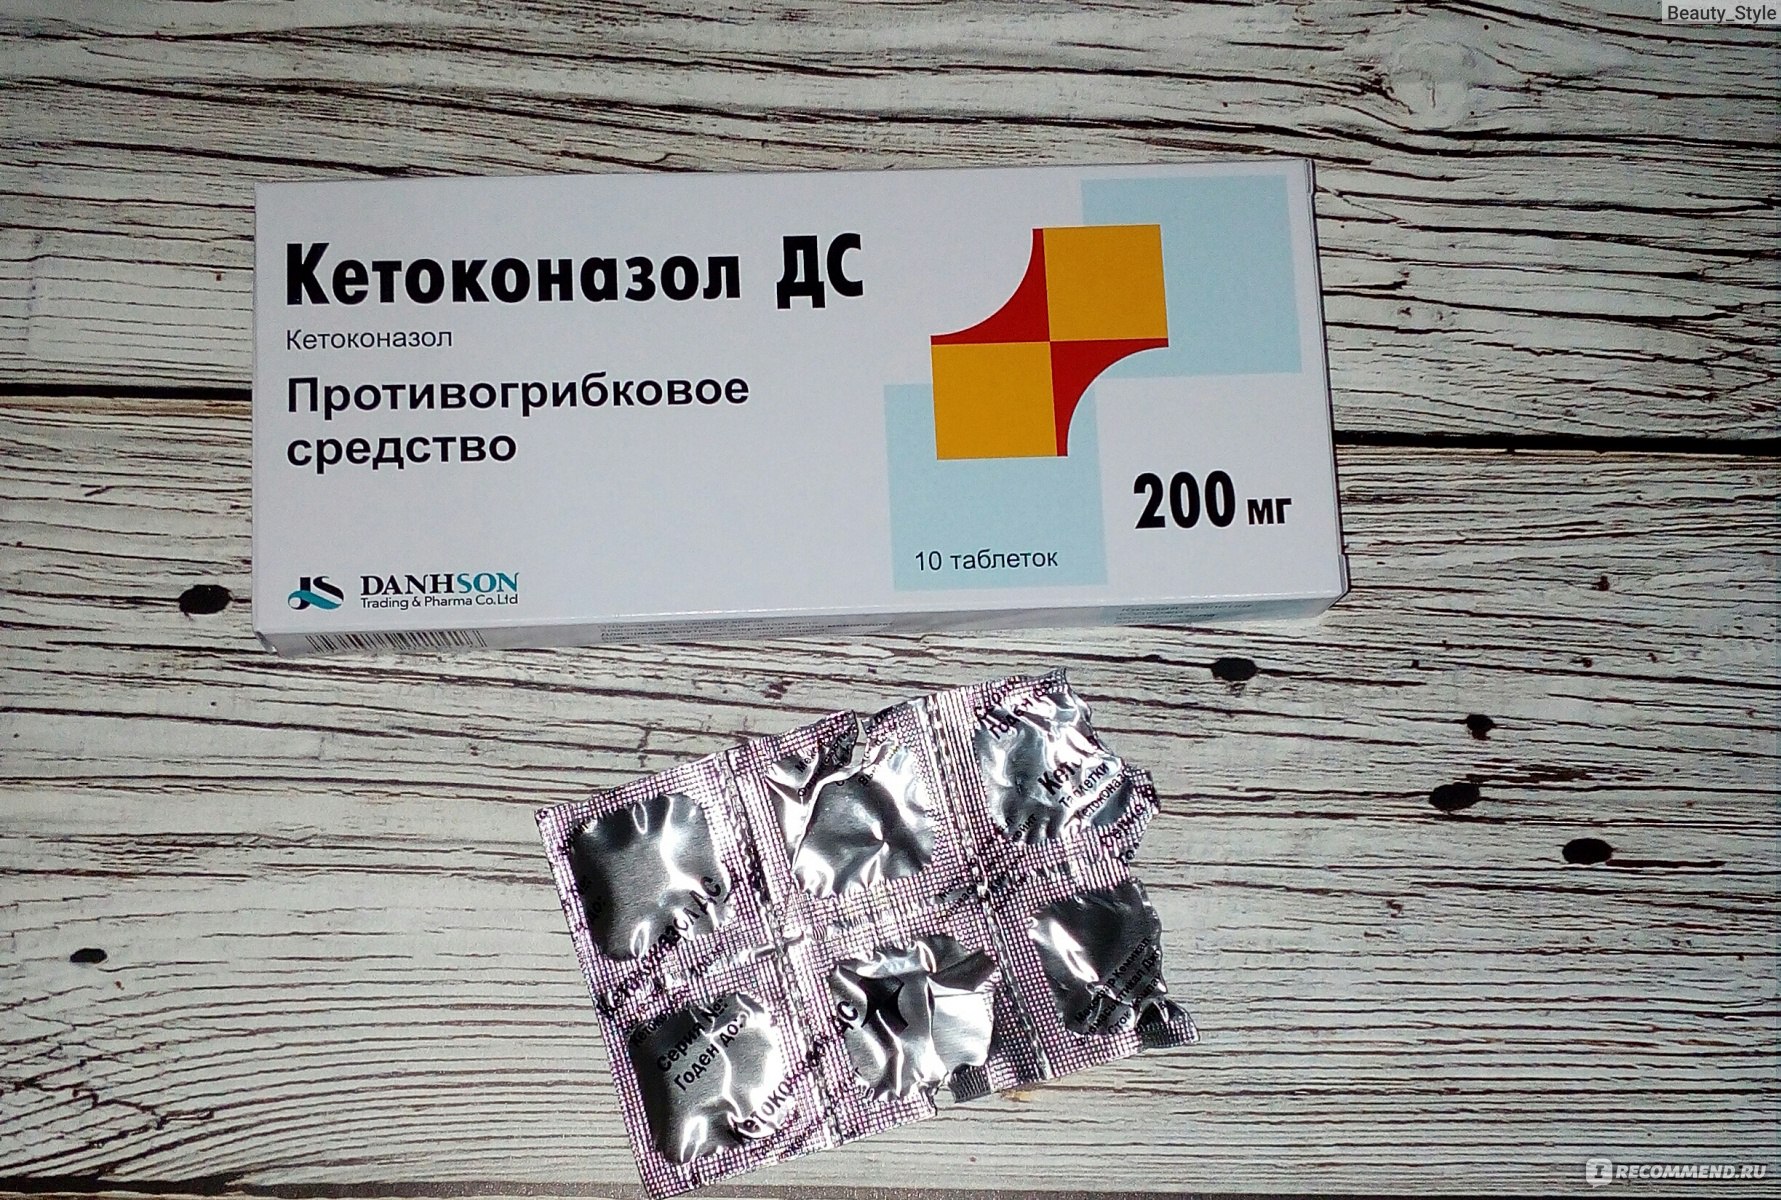 Просталамин таблетки отзывы мужчин. Кетоконазол ДС таб 200мг. Кетоконазол ДС таб 200мг №10. Кетоконазол 400 мг таблетки. Кетоконазол 200 мг таблетки.